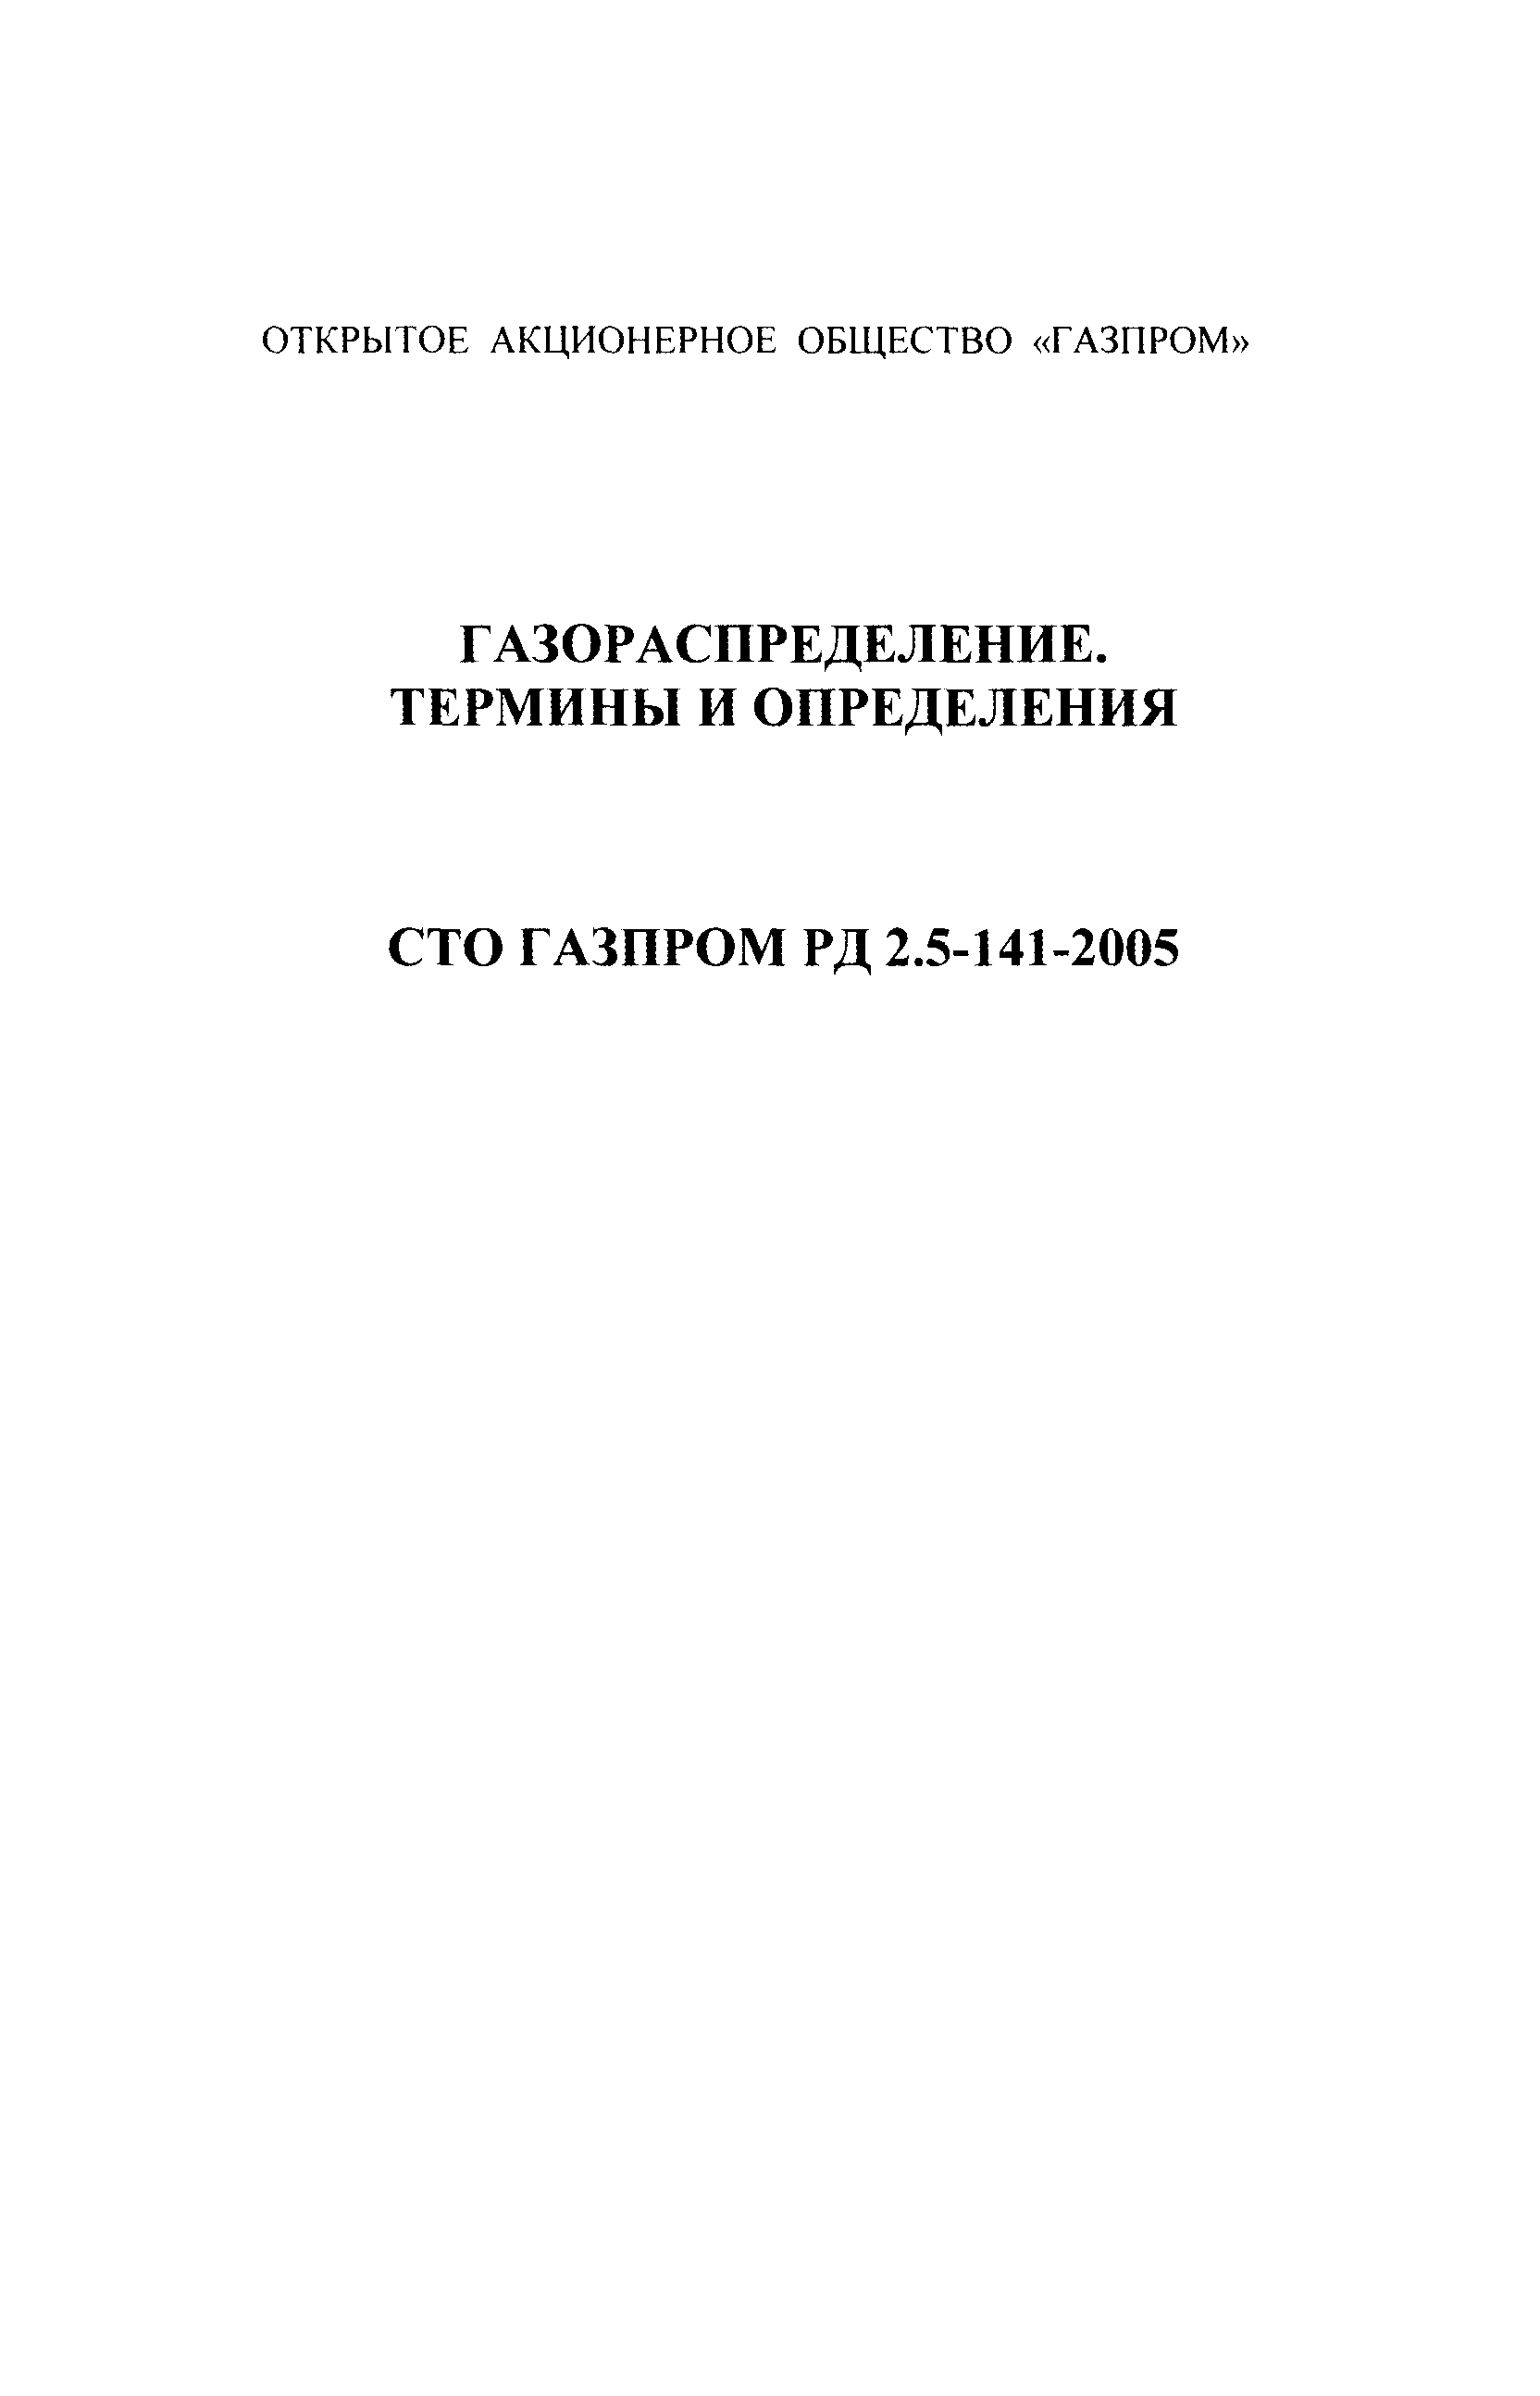 СТО Газпром РД 2.5-141-2005